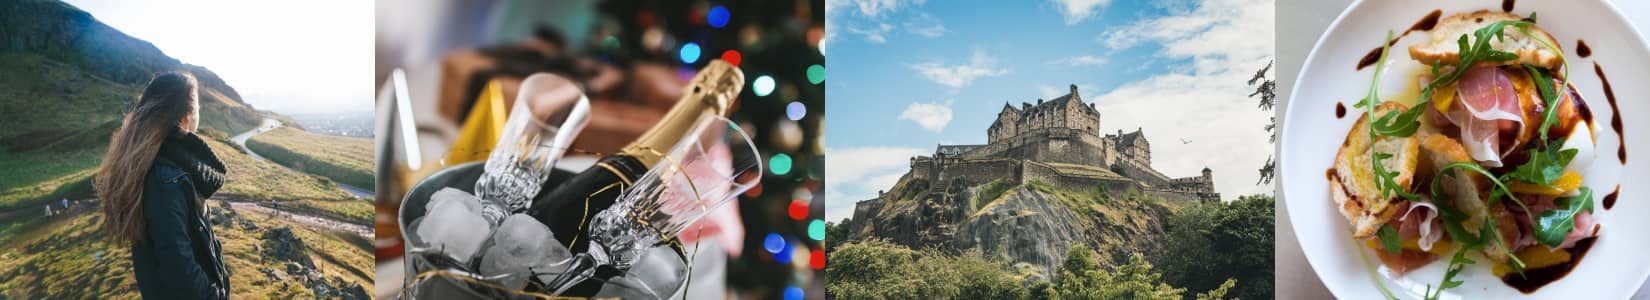 Edinburgh City Collage of Photographs